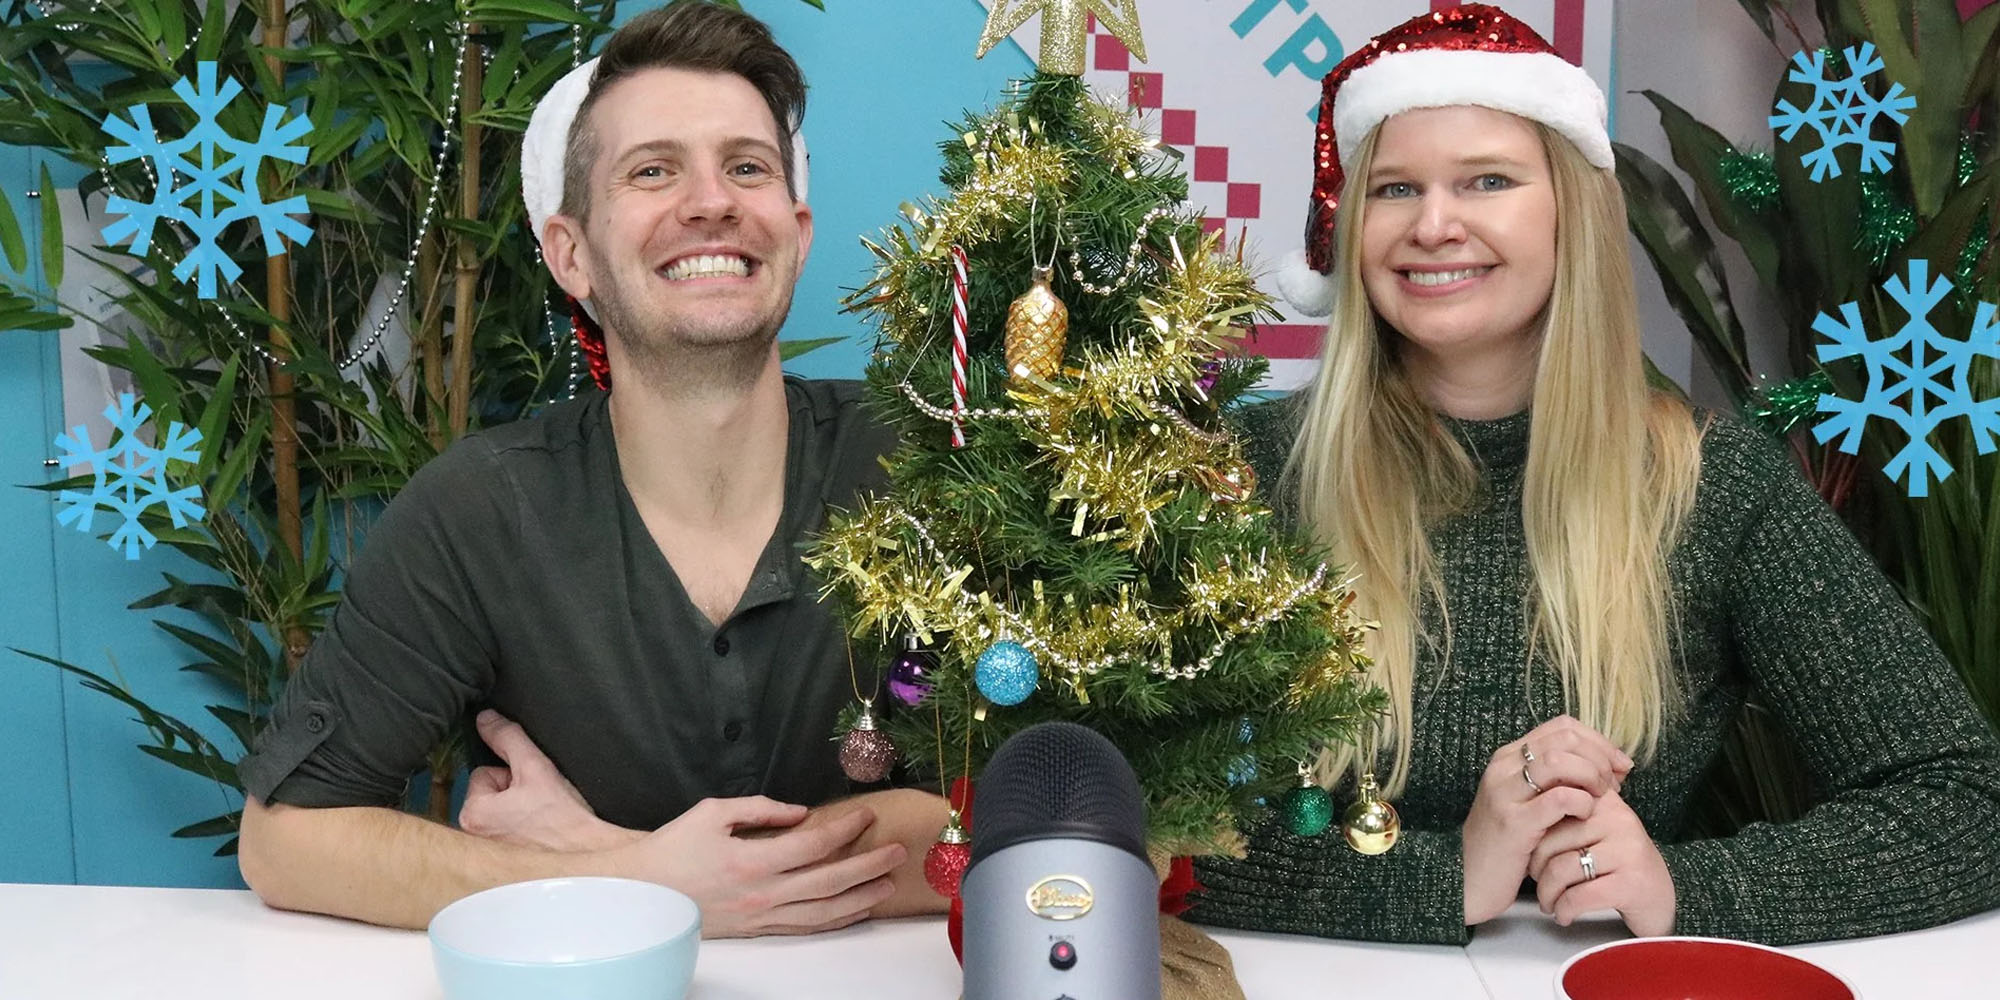 Rob and Amy wearing Santa hats, next to a small Christmas tree